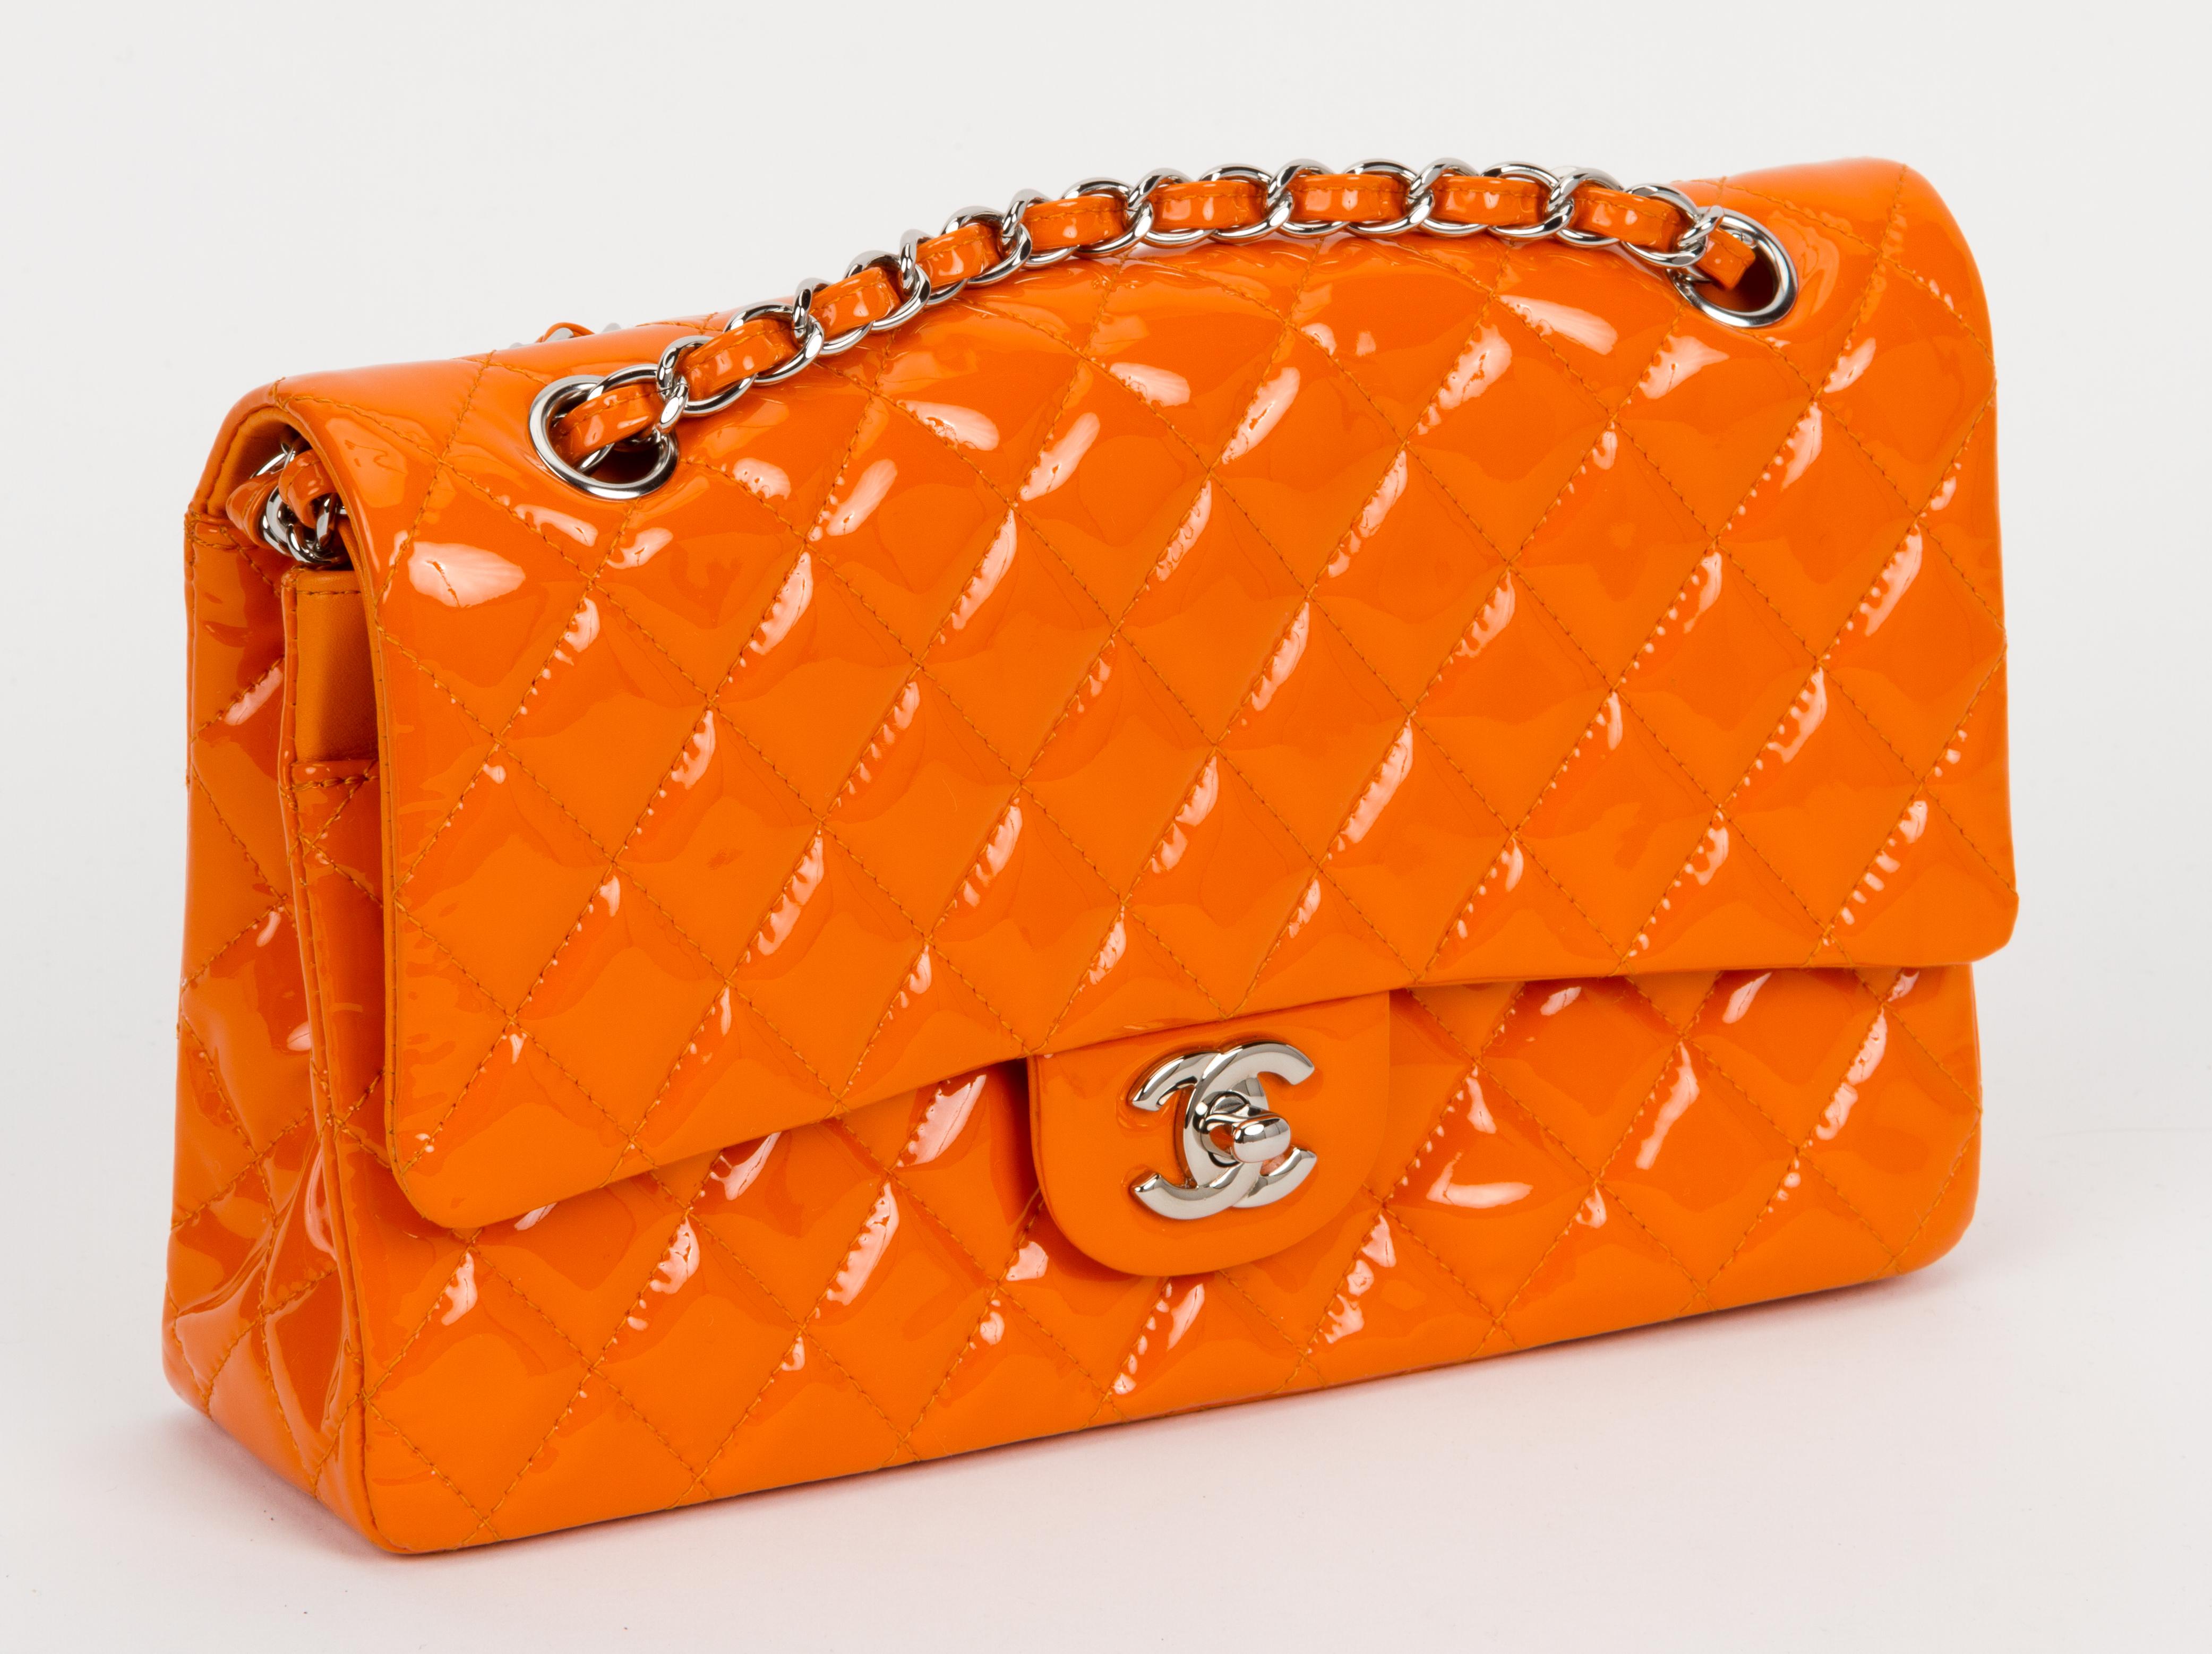 Chanel orange patent leather classic double flap lambskin 10